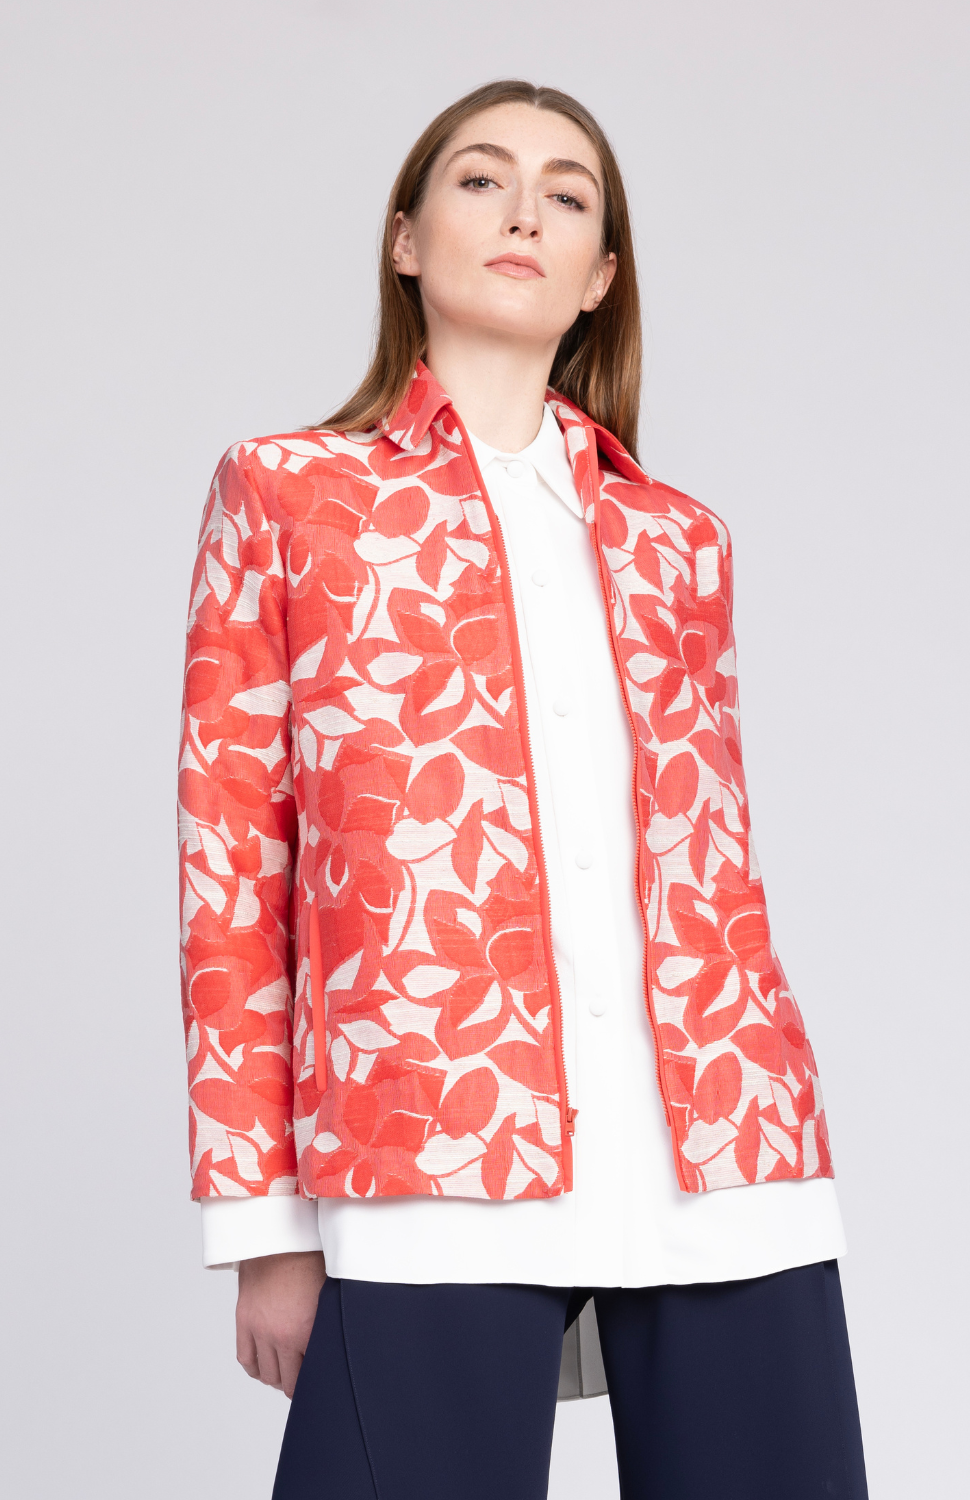 PREORDER Tonal Floral Jacquard Zip Front Jacket w/ Collar